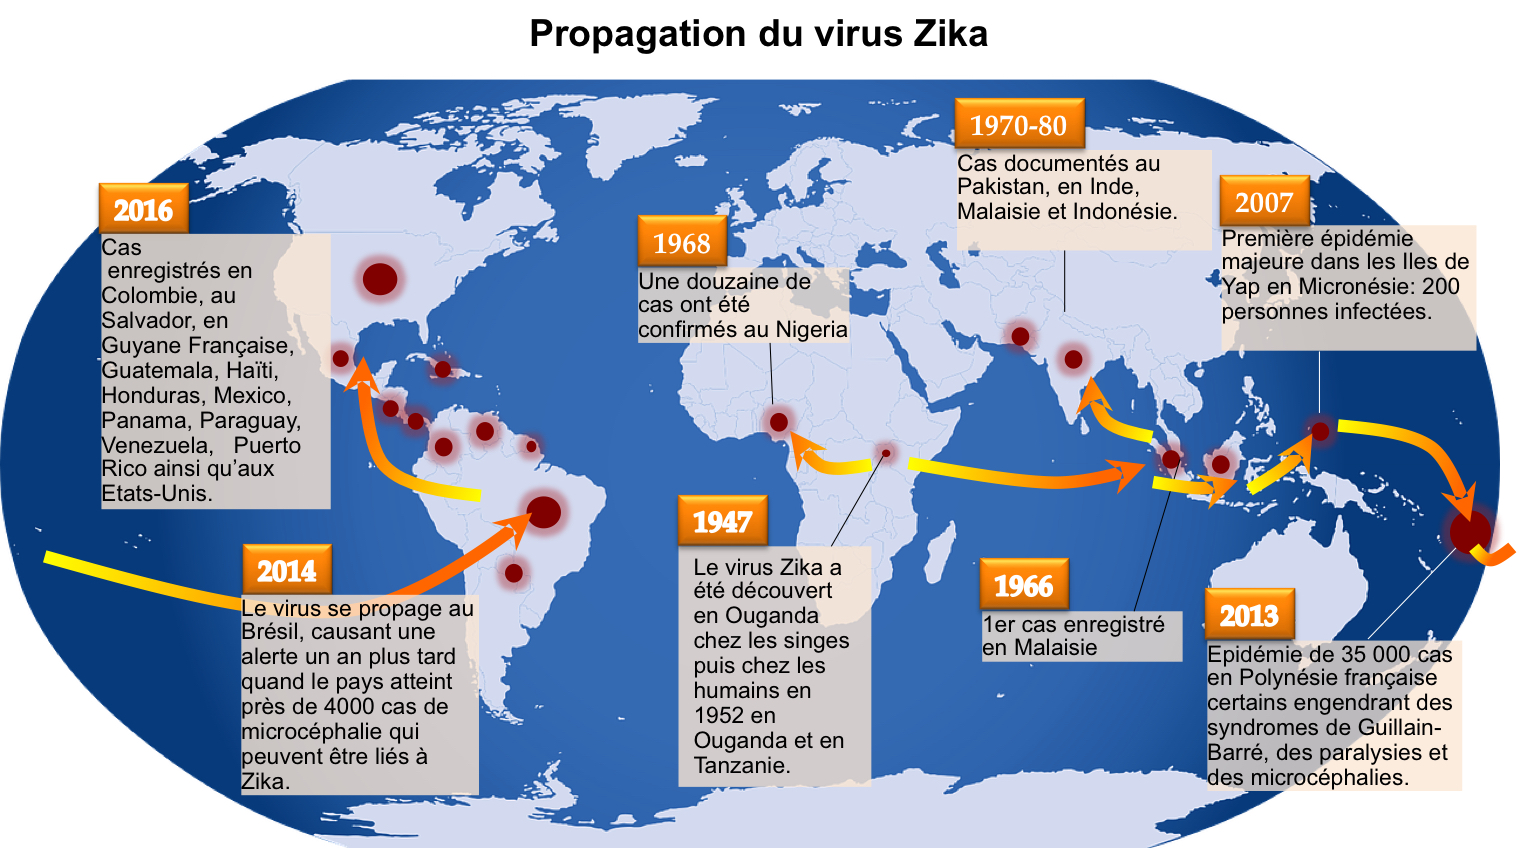 Figure-1-Propagation-du-virus-Zika-copie